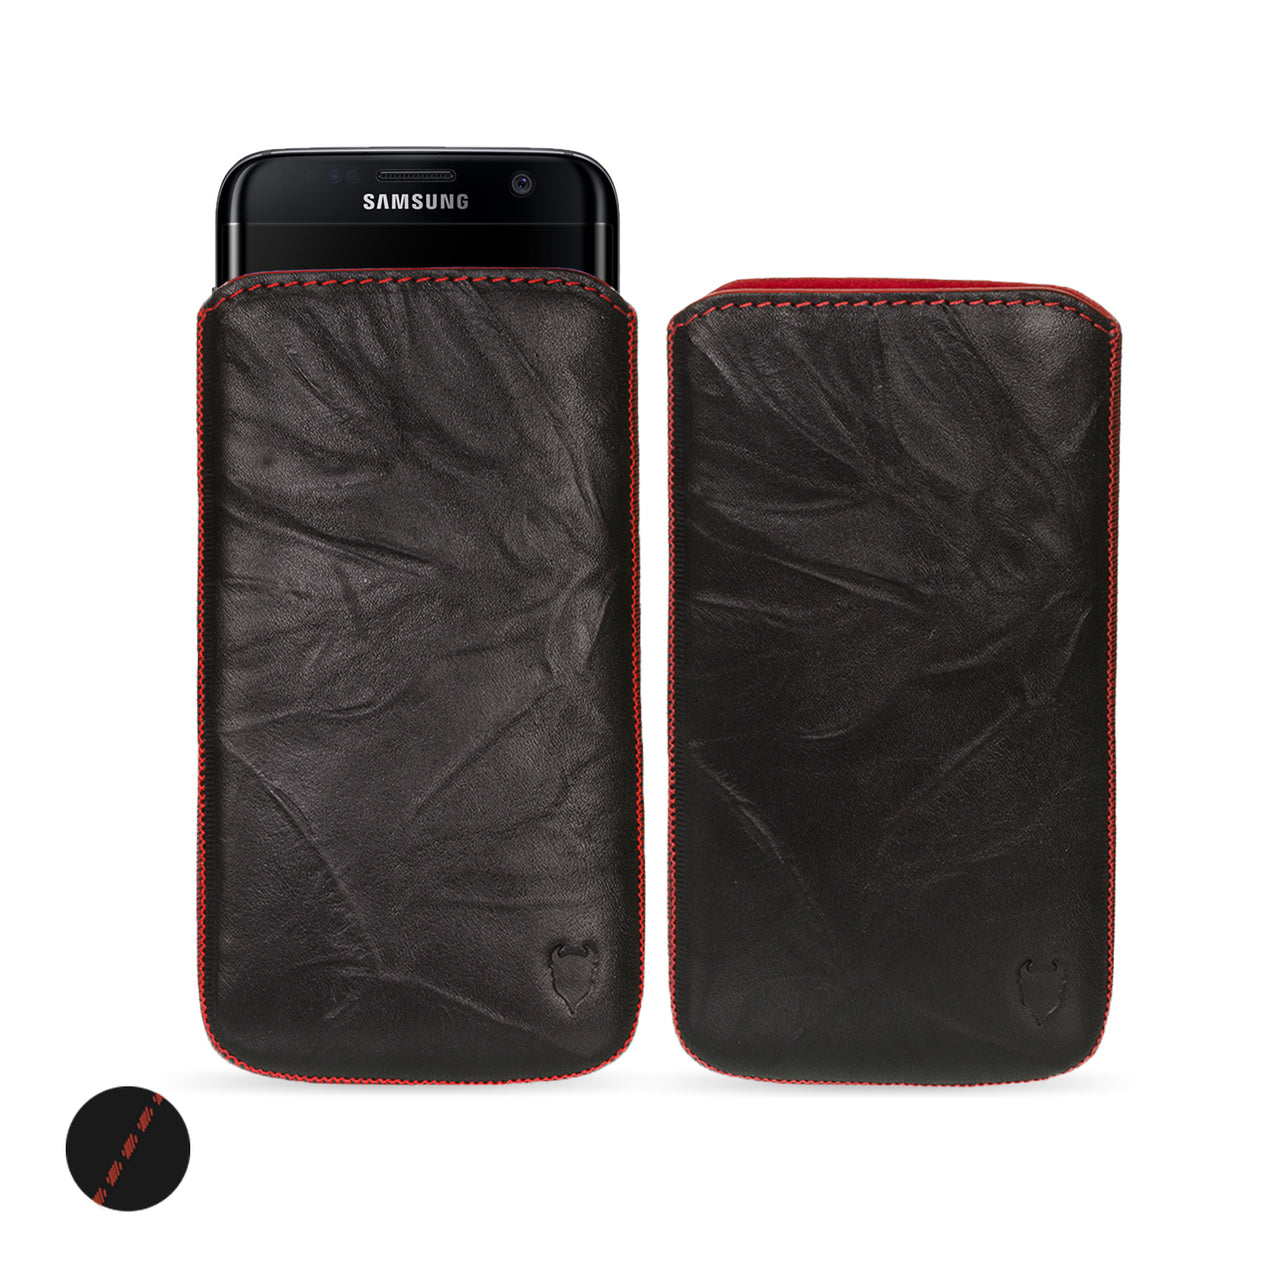 Samsung Galaxy S7 Edge Genuine Leather Pouch Sleeve Case | Artisanpouch